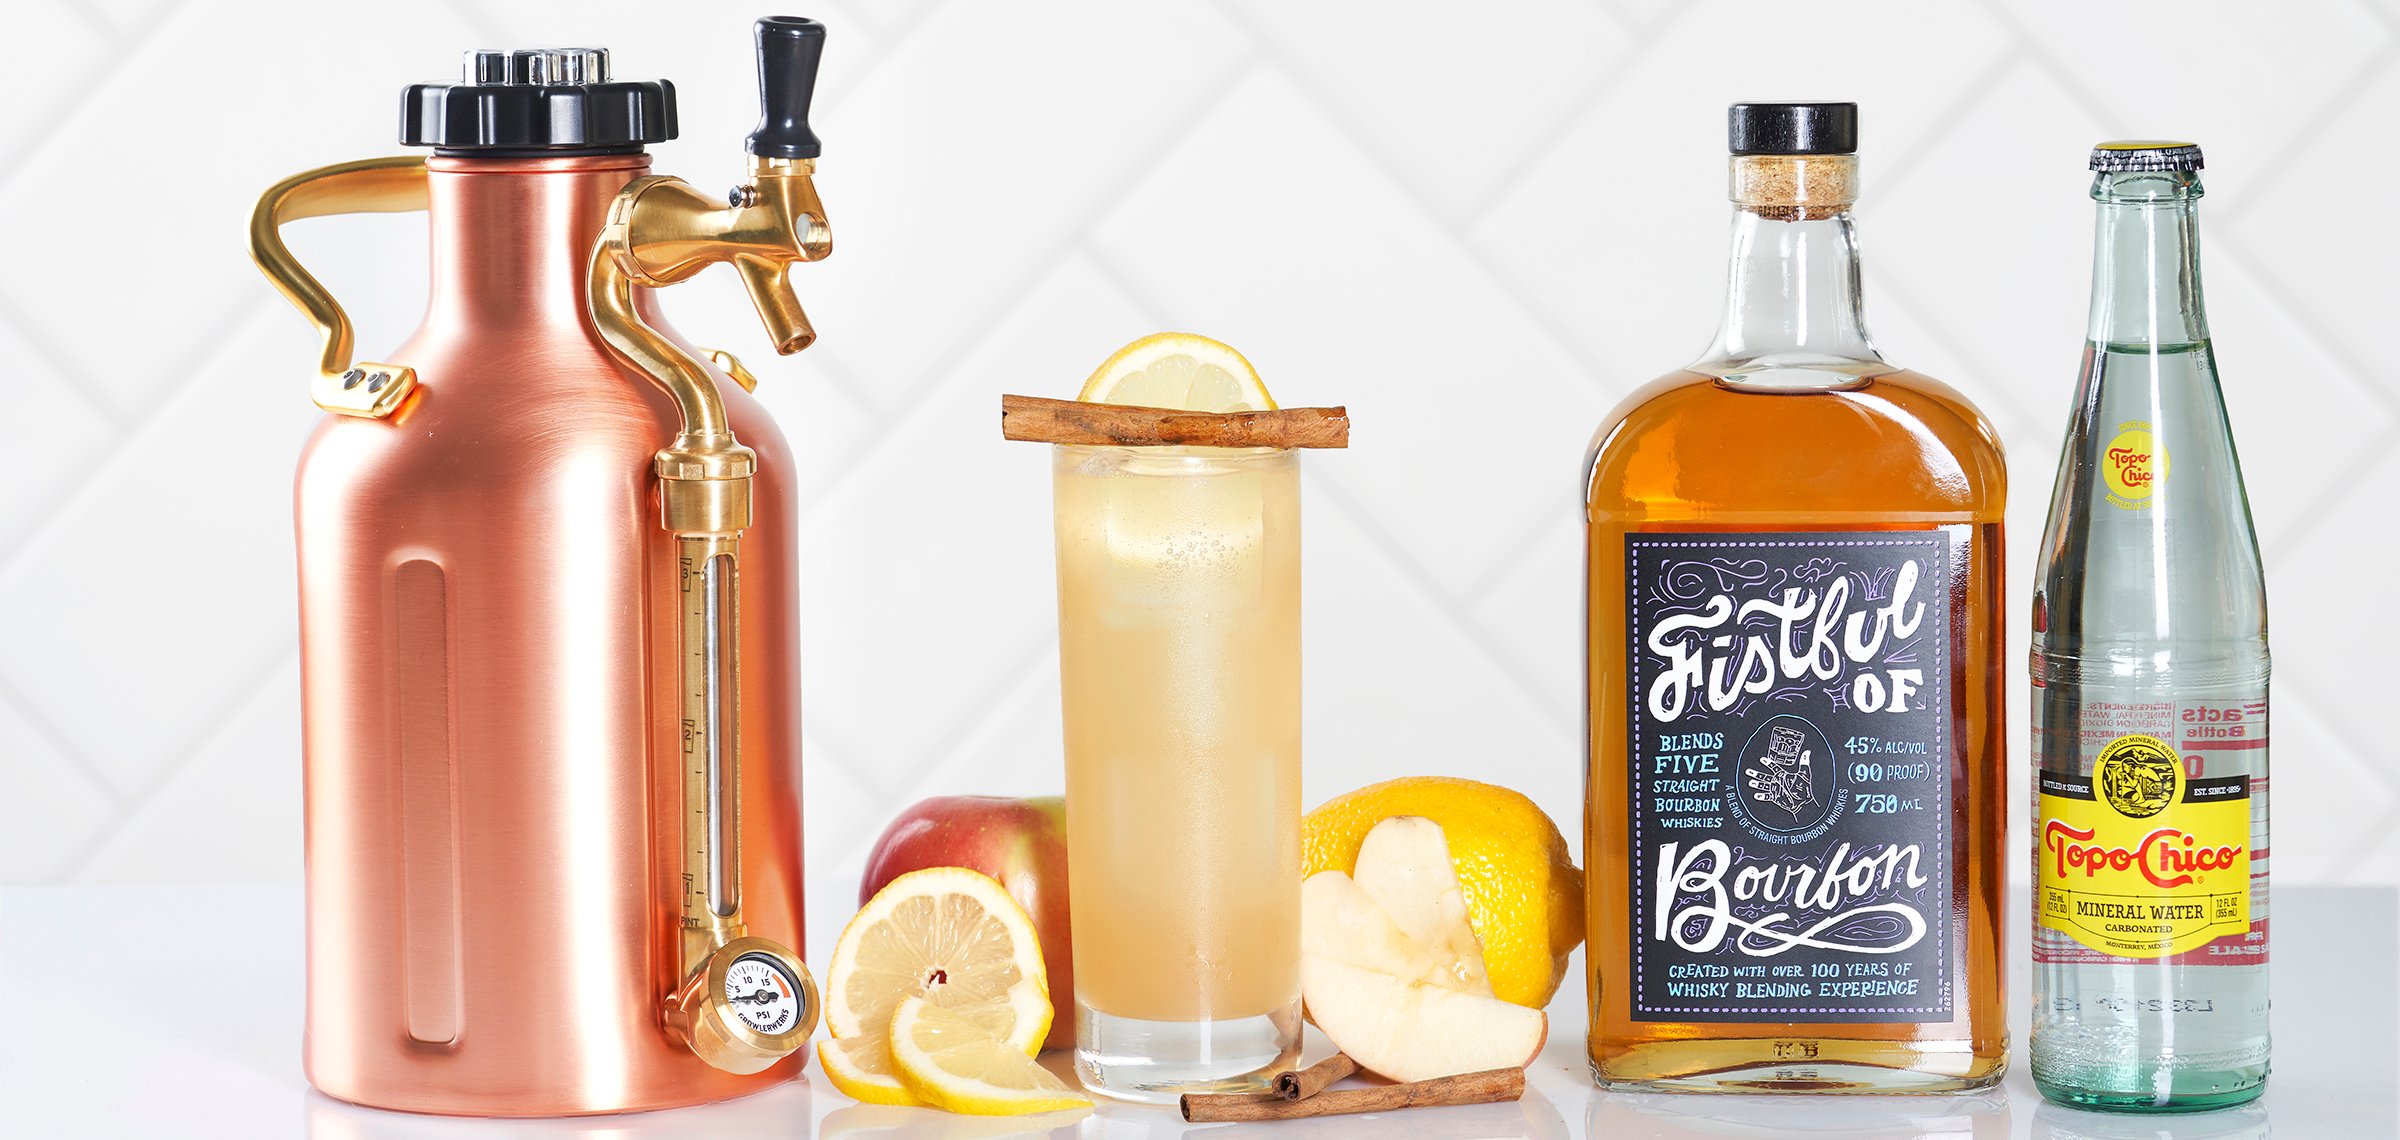 fistful of bourbon apple cinnamon highball cocktail kit